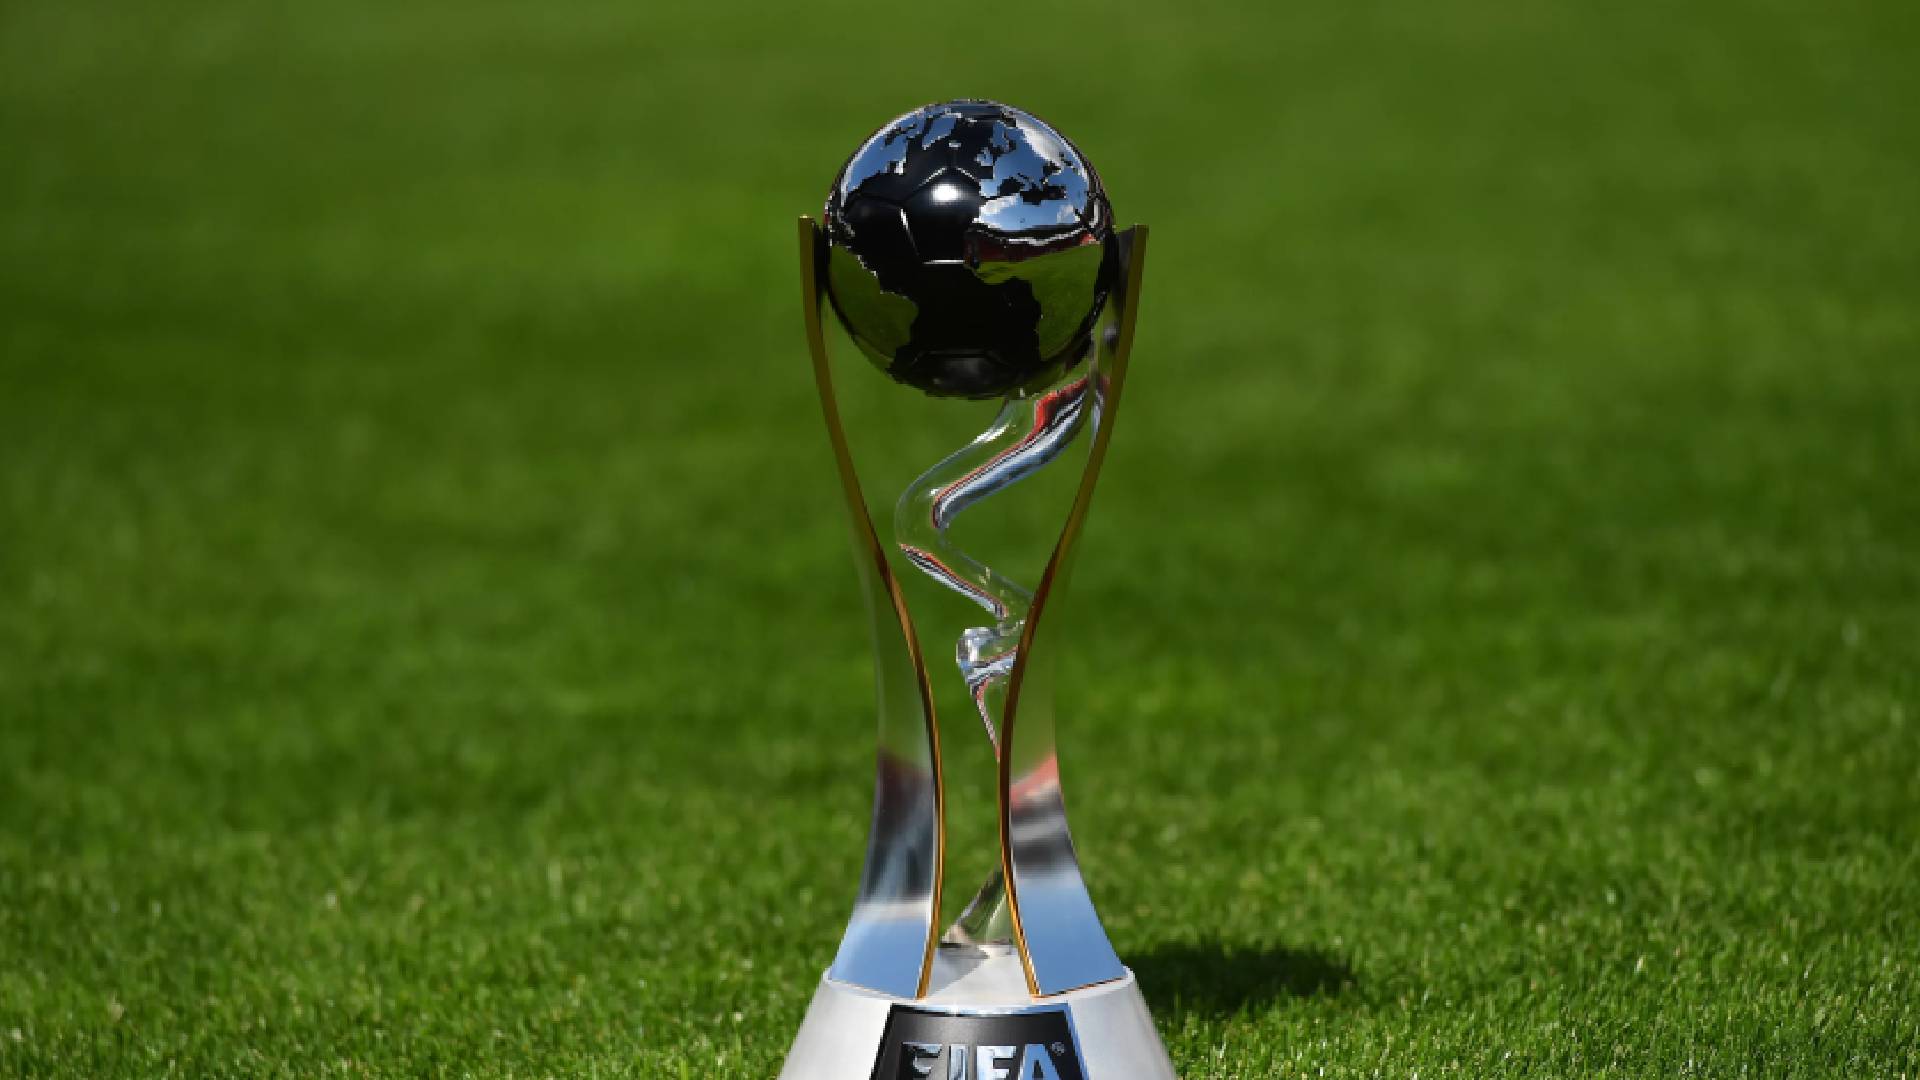 trofi piala dunia u 20 fifa FIFA Batalkan Hak Tuan Rumah Indonesia Sebagai Penganjur Piala Dunia B-20 2023